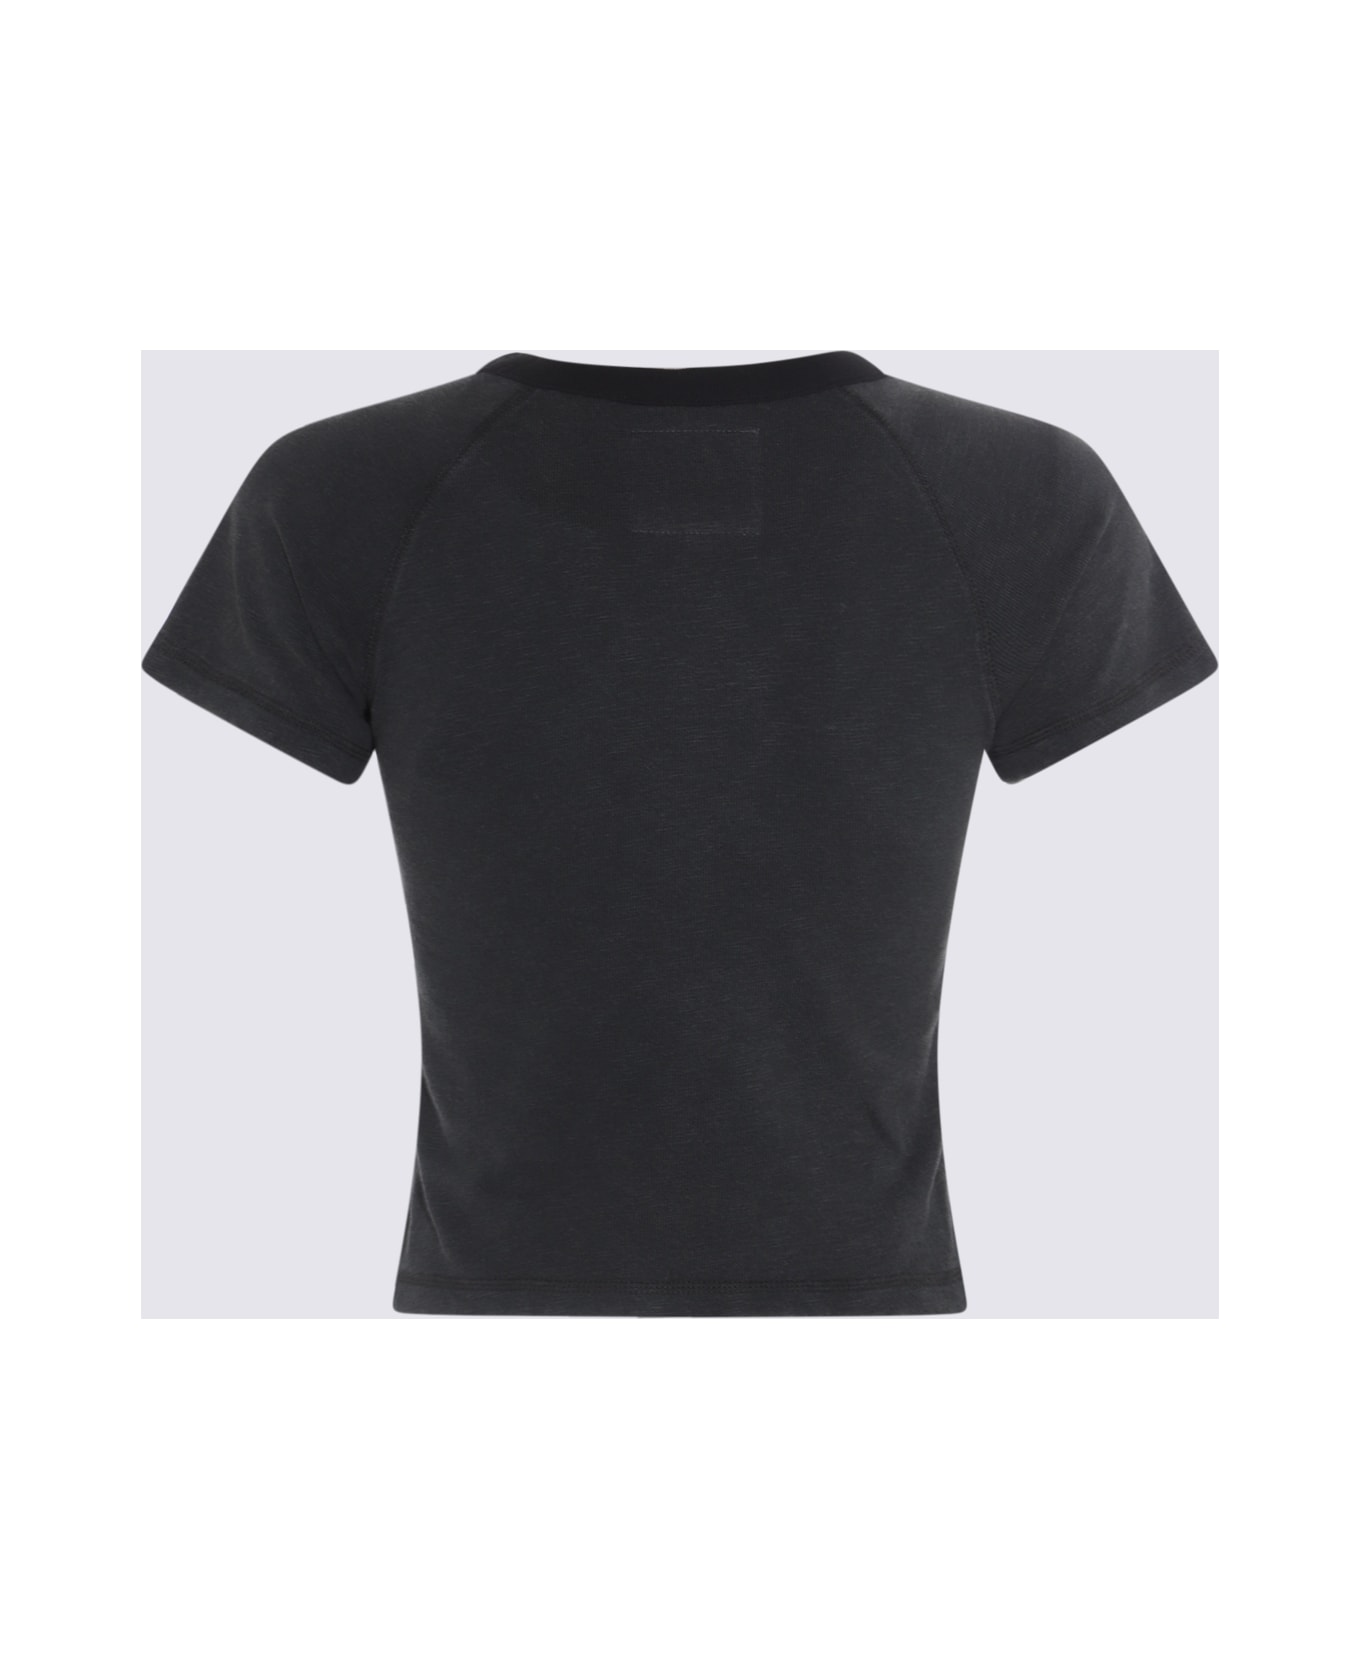 (di)vision Black Cotton T-shirt - Black Tシャツ